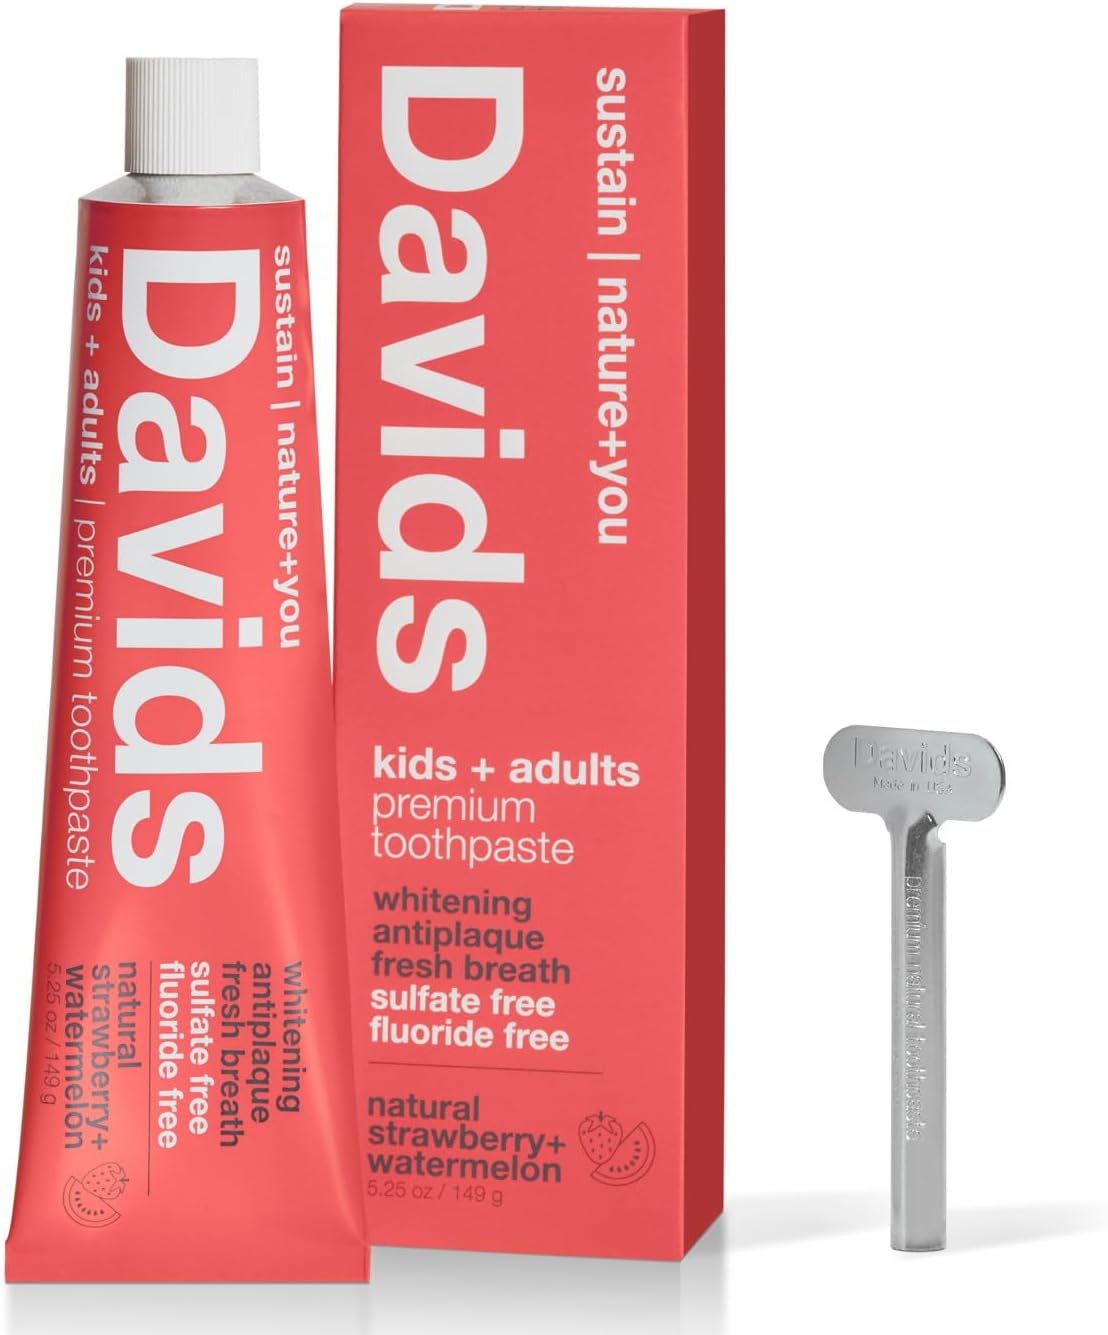 Davids Fluoride Free Kids & Adults Toothpaste, Teeth Whitening, Antiplaque, SLS (Sulfate) Free, Promotes Enamel Health, Mouth & Gum Detox, Natural Strawberry Watermelon, 5.25oz